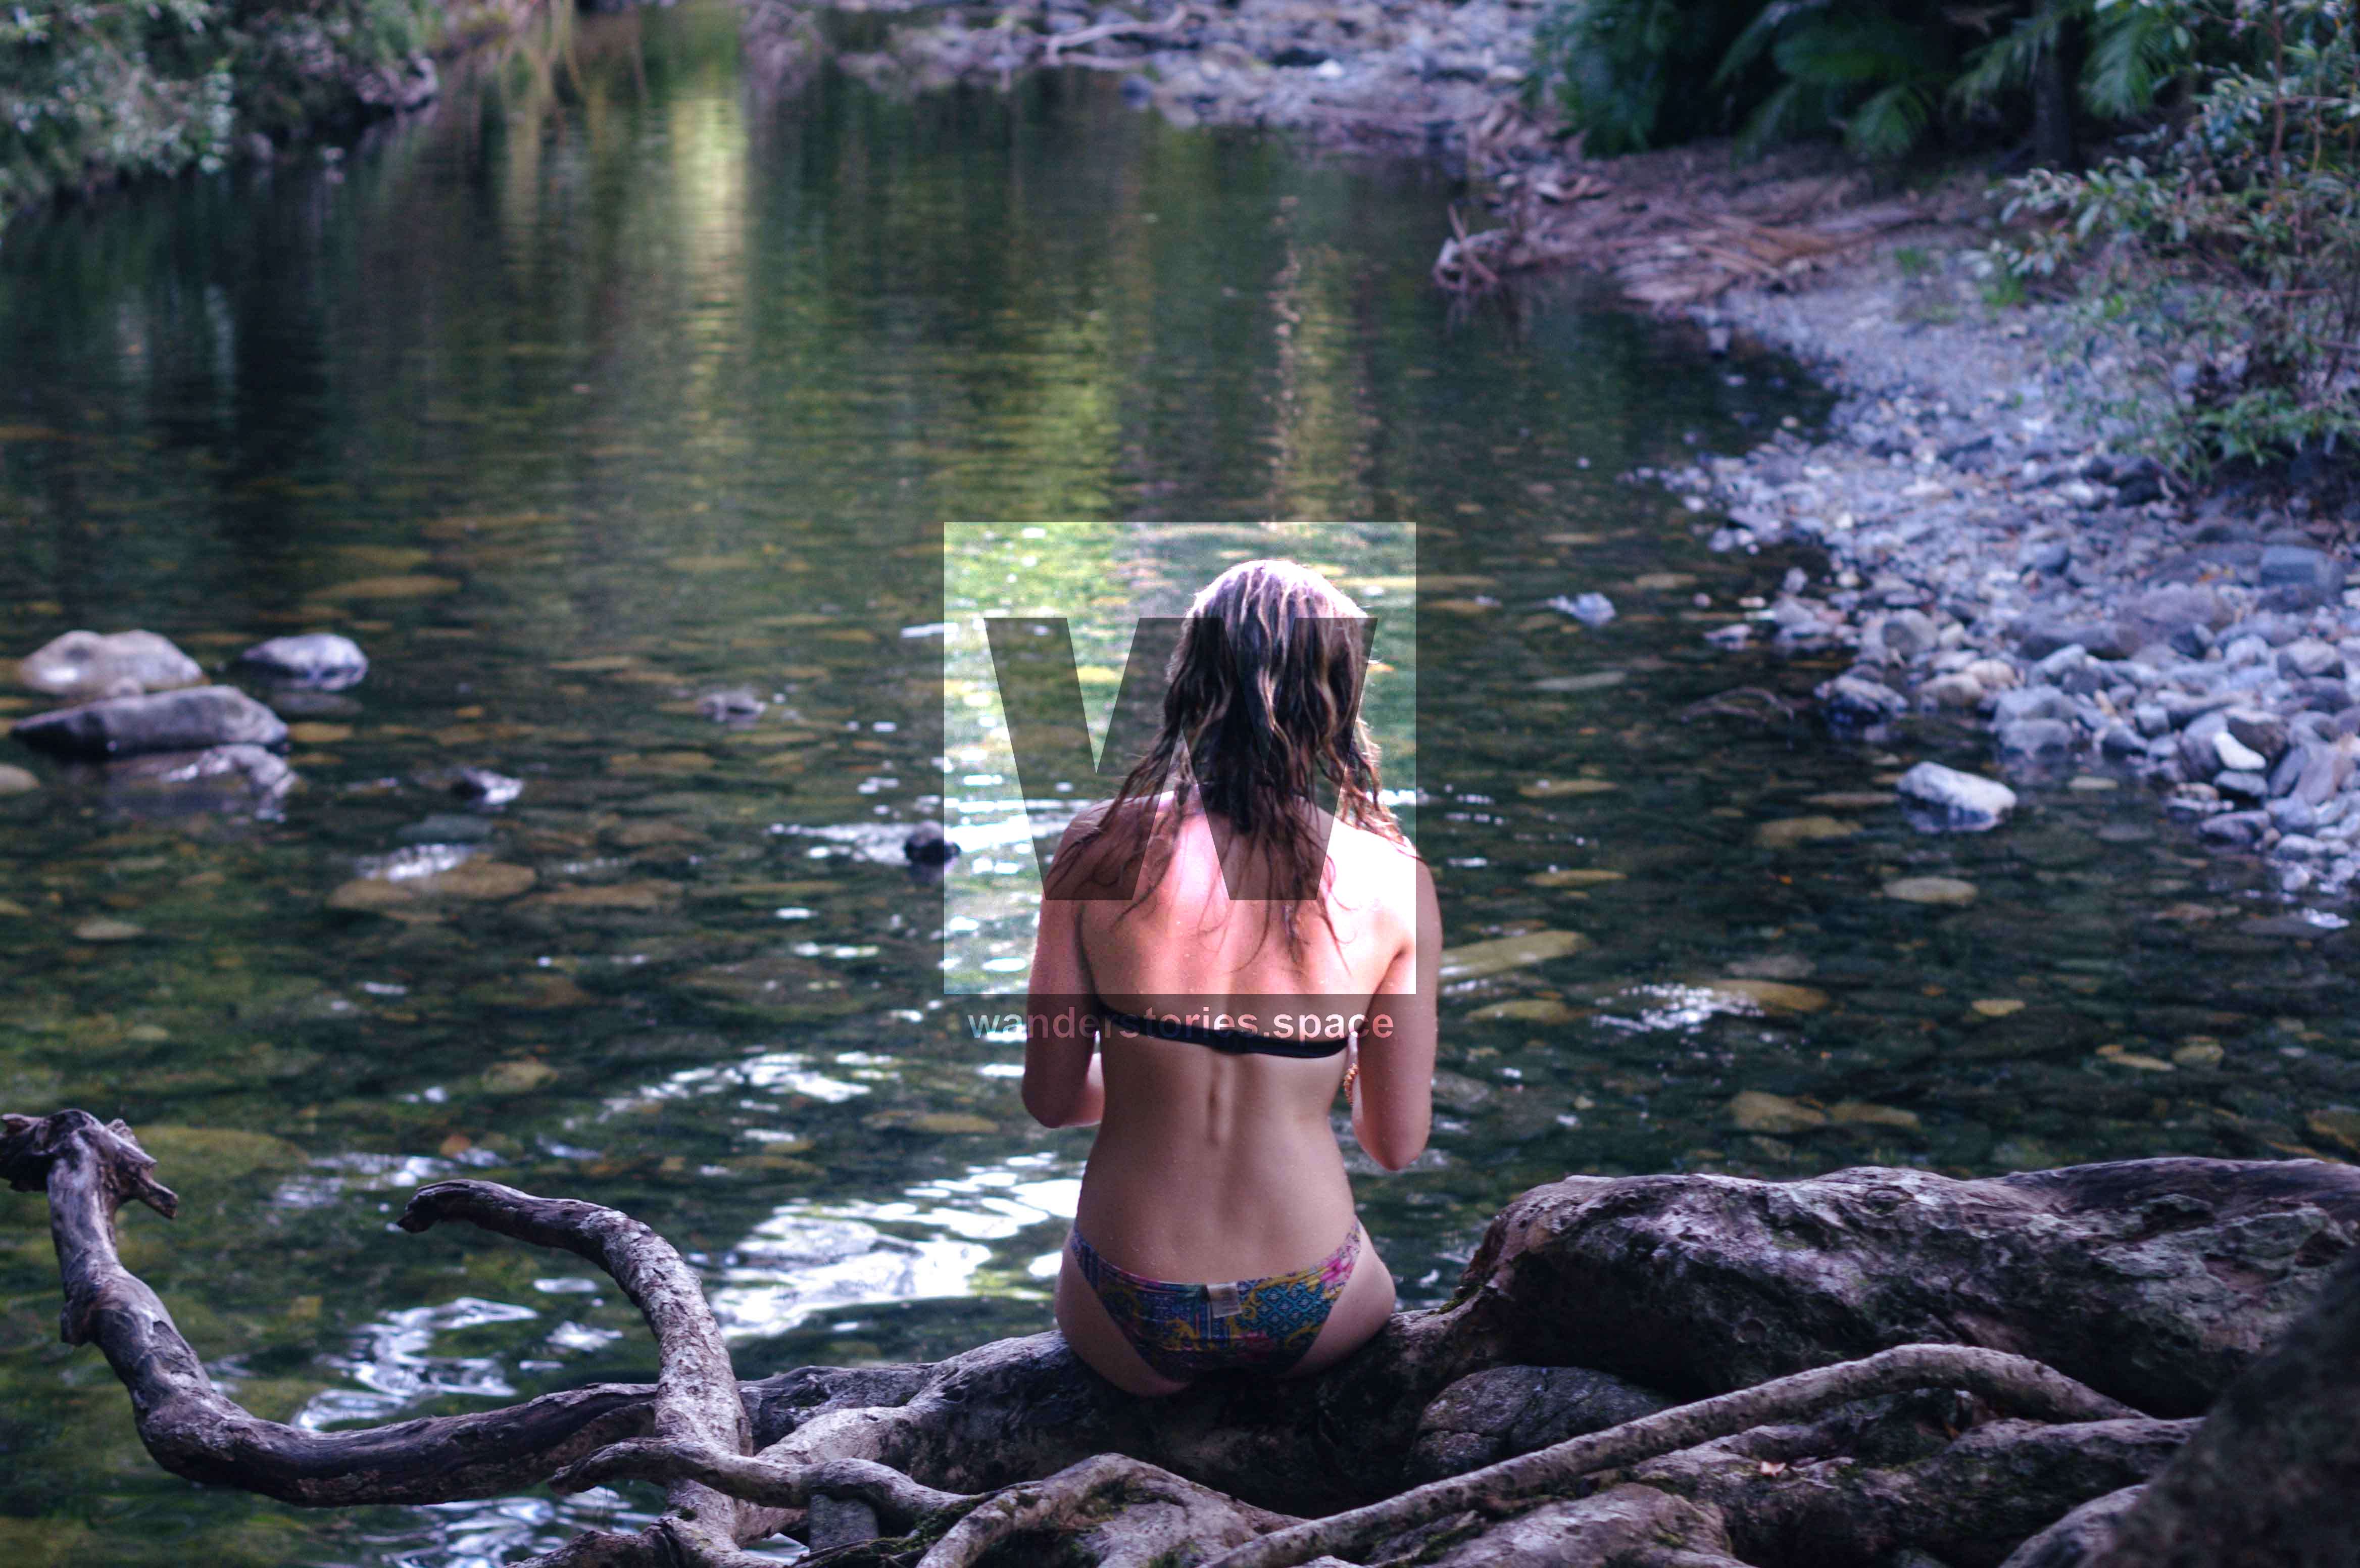 Sitting by a creek in a bikini